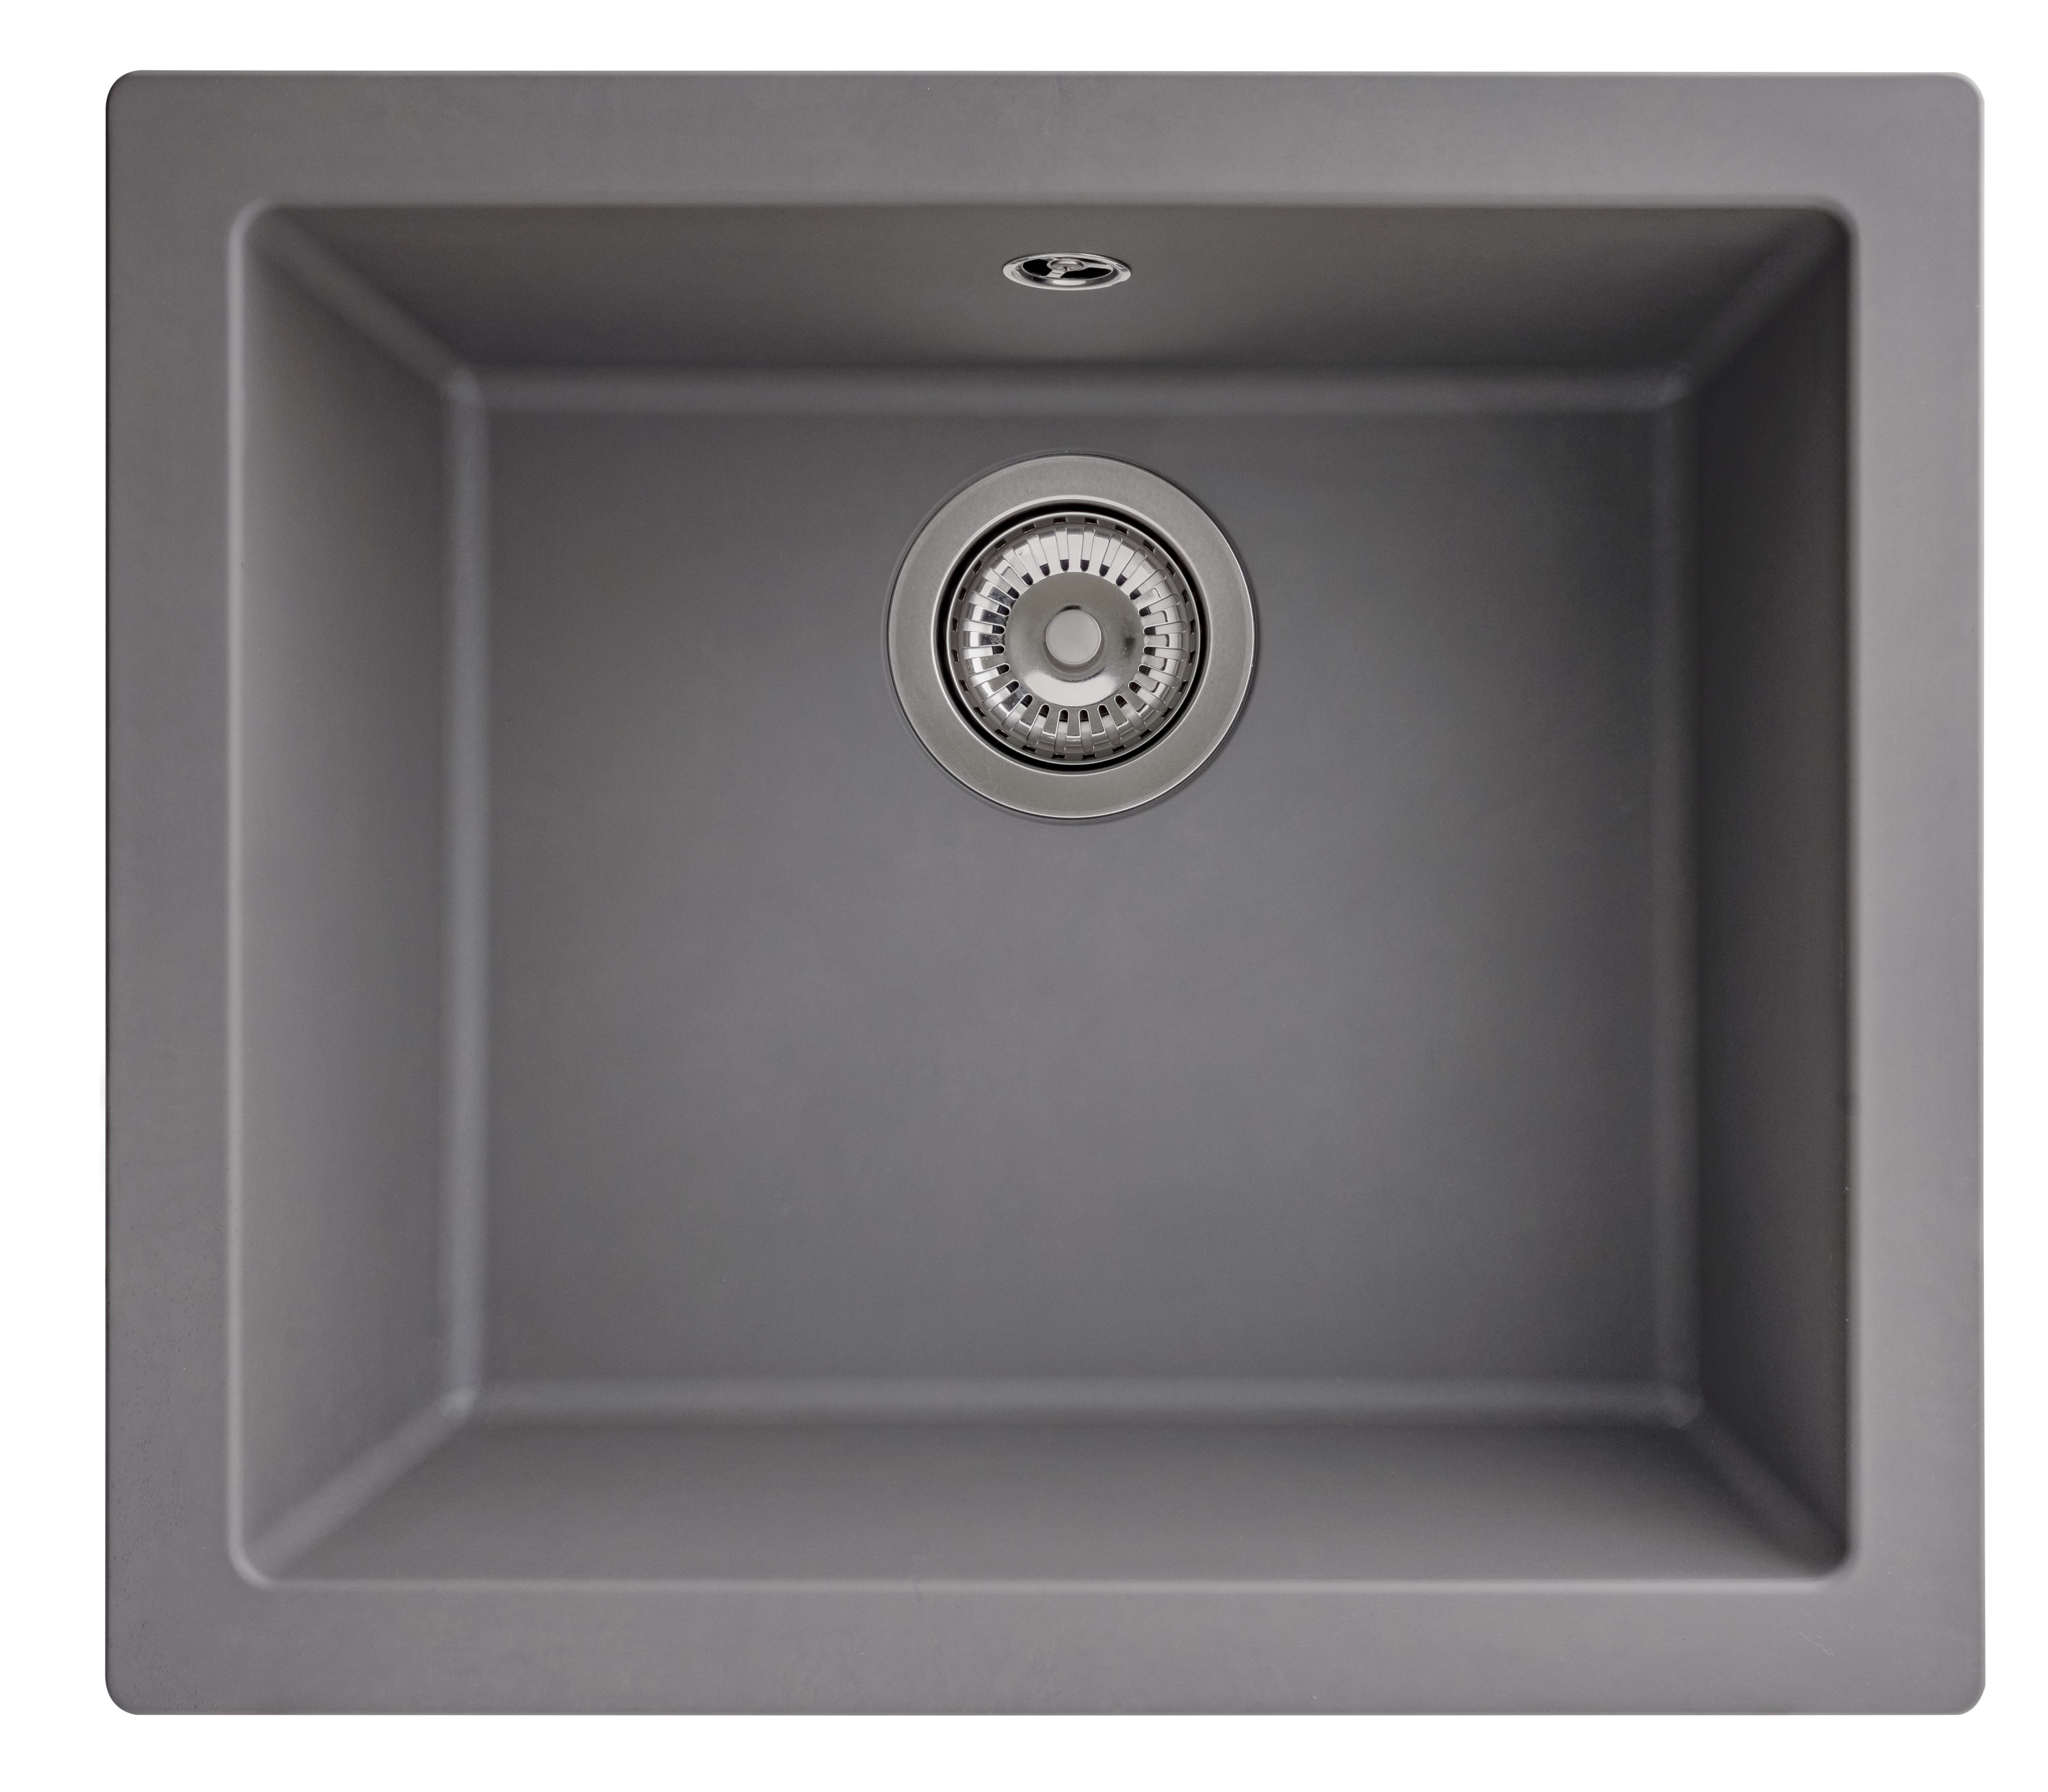 GoodHome Borage Grey Resin 1 Bowl Kitchen sink 440mm x 500mm